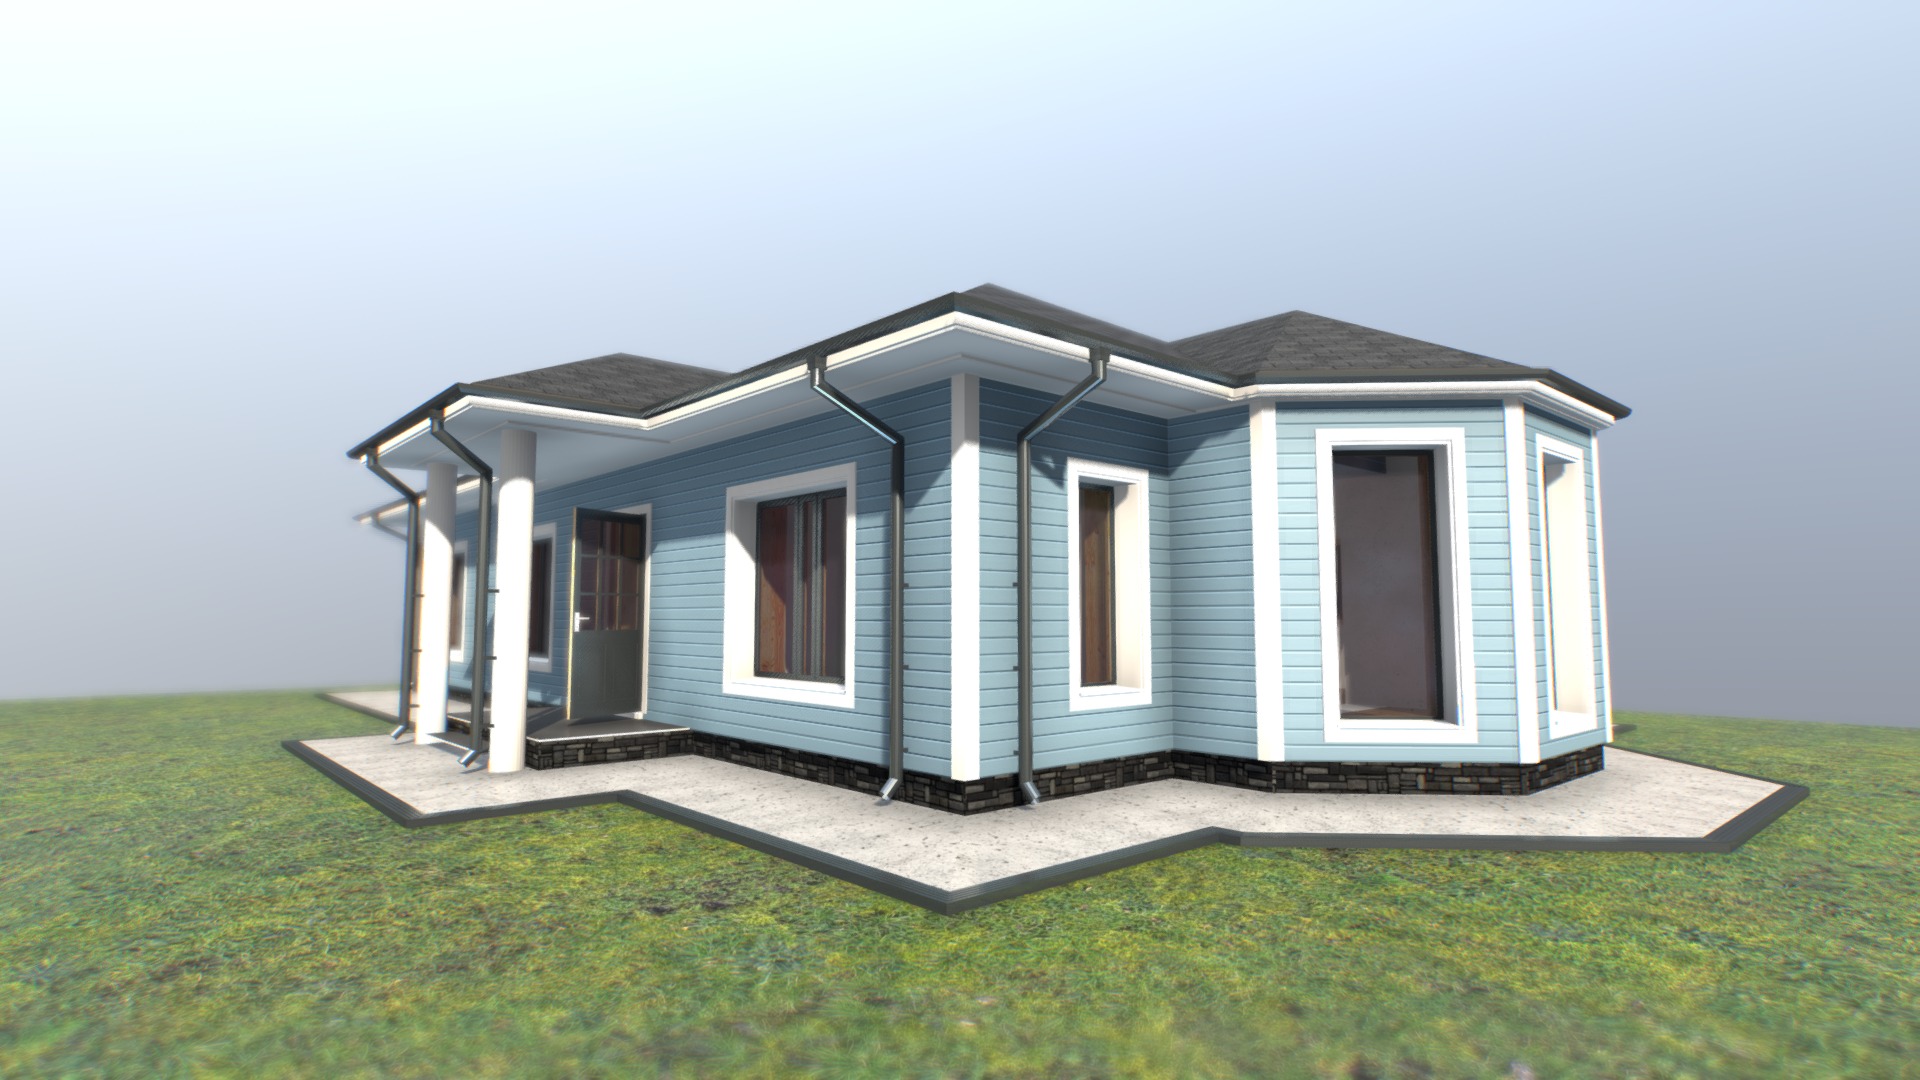 3D model 1 floor residential house – Project PR03_02_2020 - This is a 3D model of the 1 floor residential house - Project PR03_02_2020. The 3D model is about a small blue and white house.